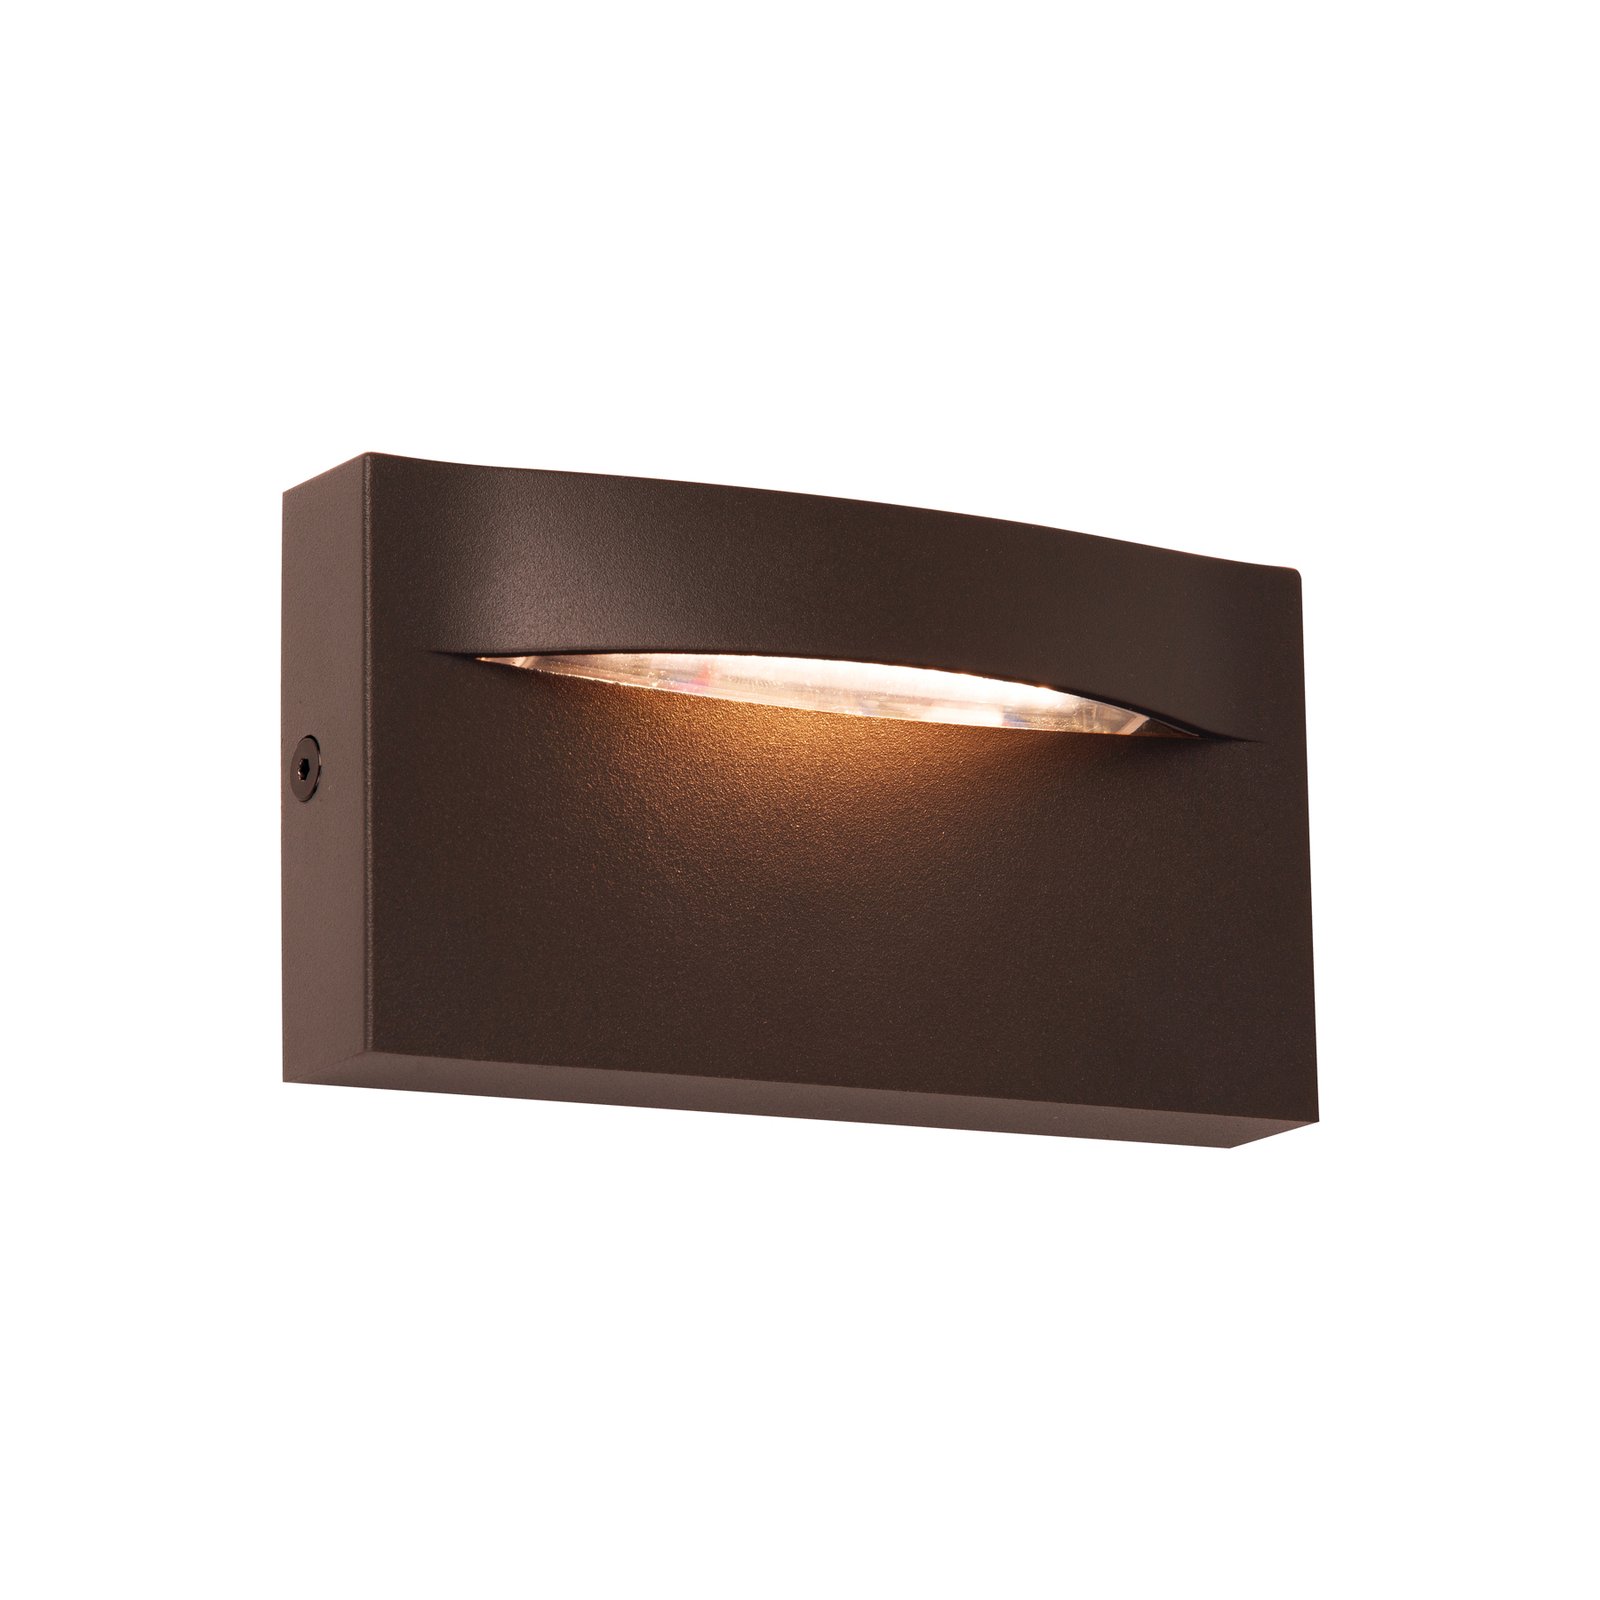 LED utomhusvägglampa Vita, rostbrun, 13,7 x 7,5 cm